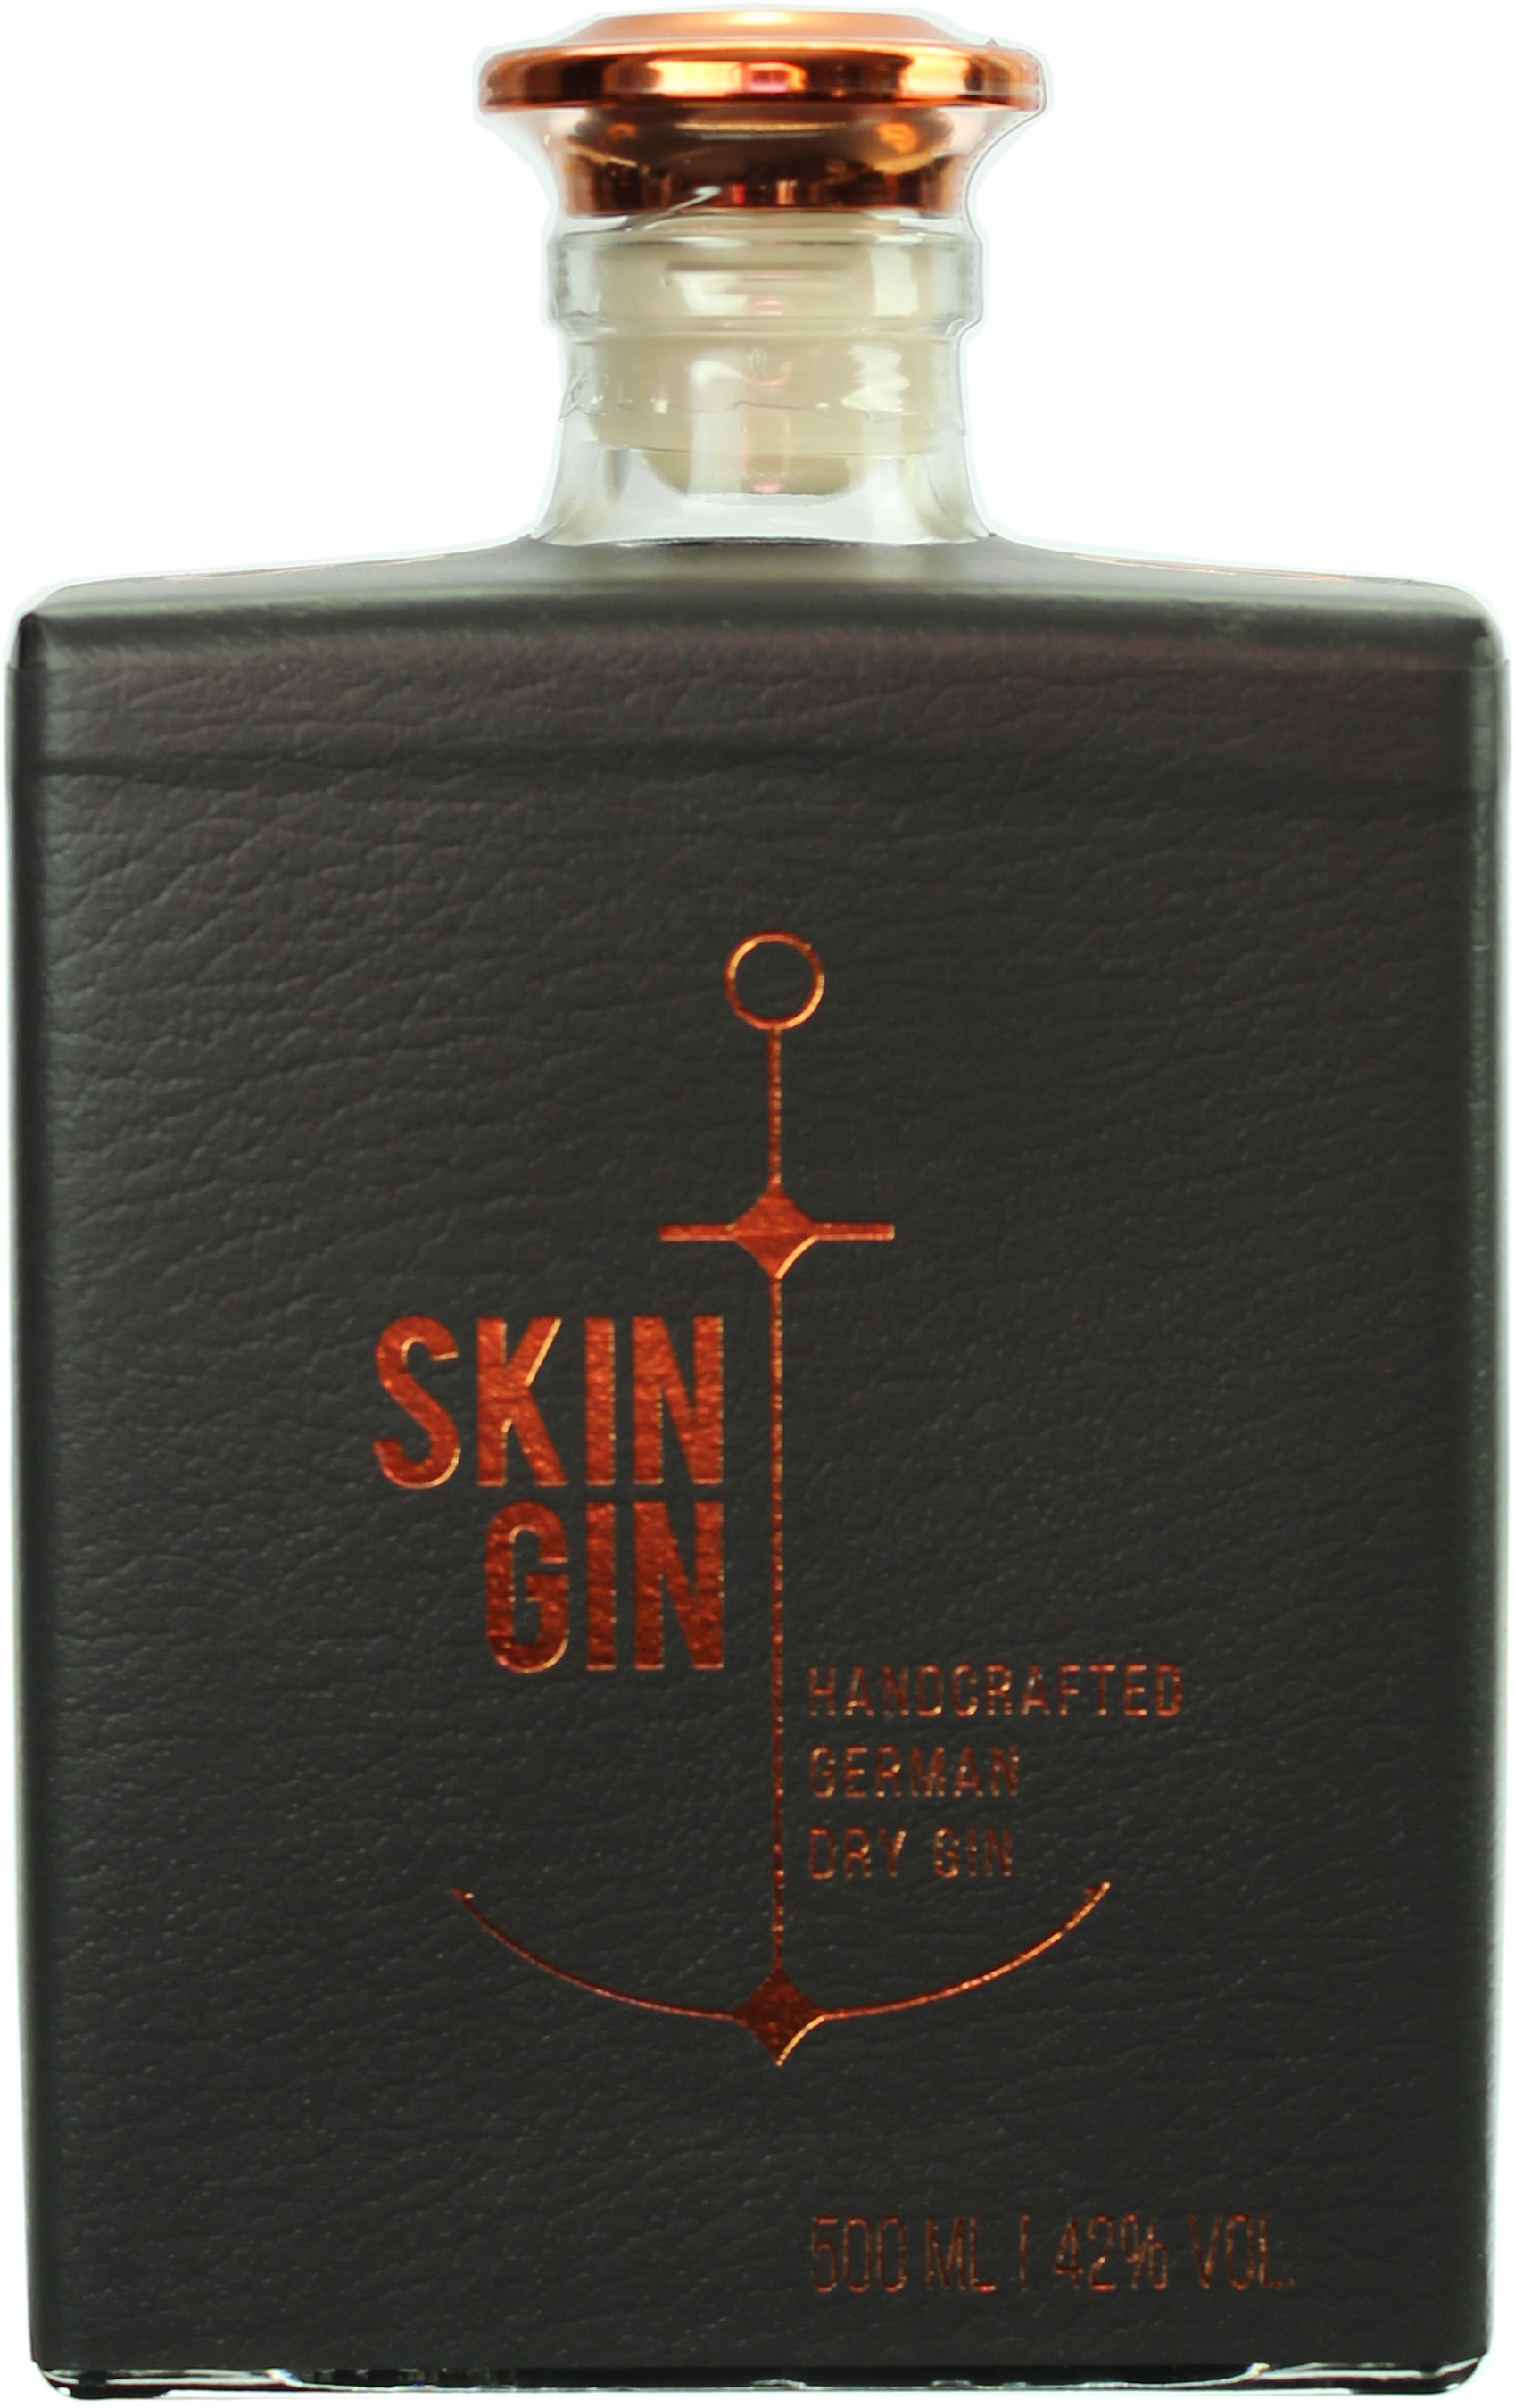 Skin Gin German Dry Gin Edition Antrazite 42.0% 0,5l